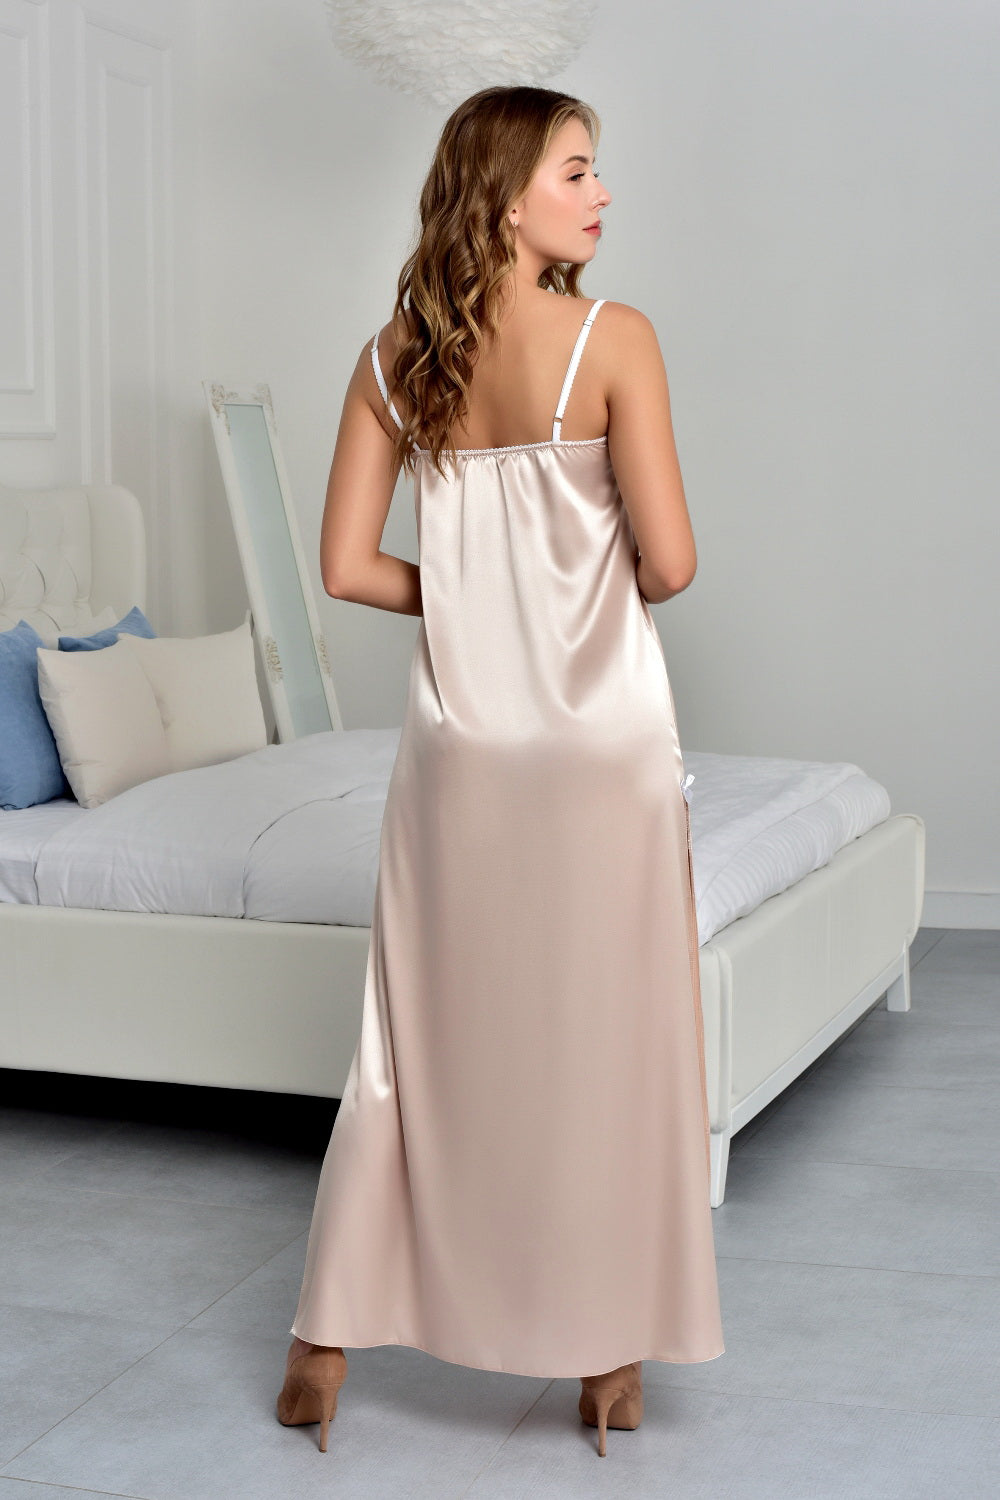 Honeymoon Lingerie: Beige Satin Nightgown